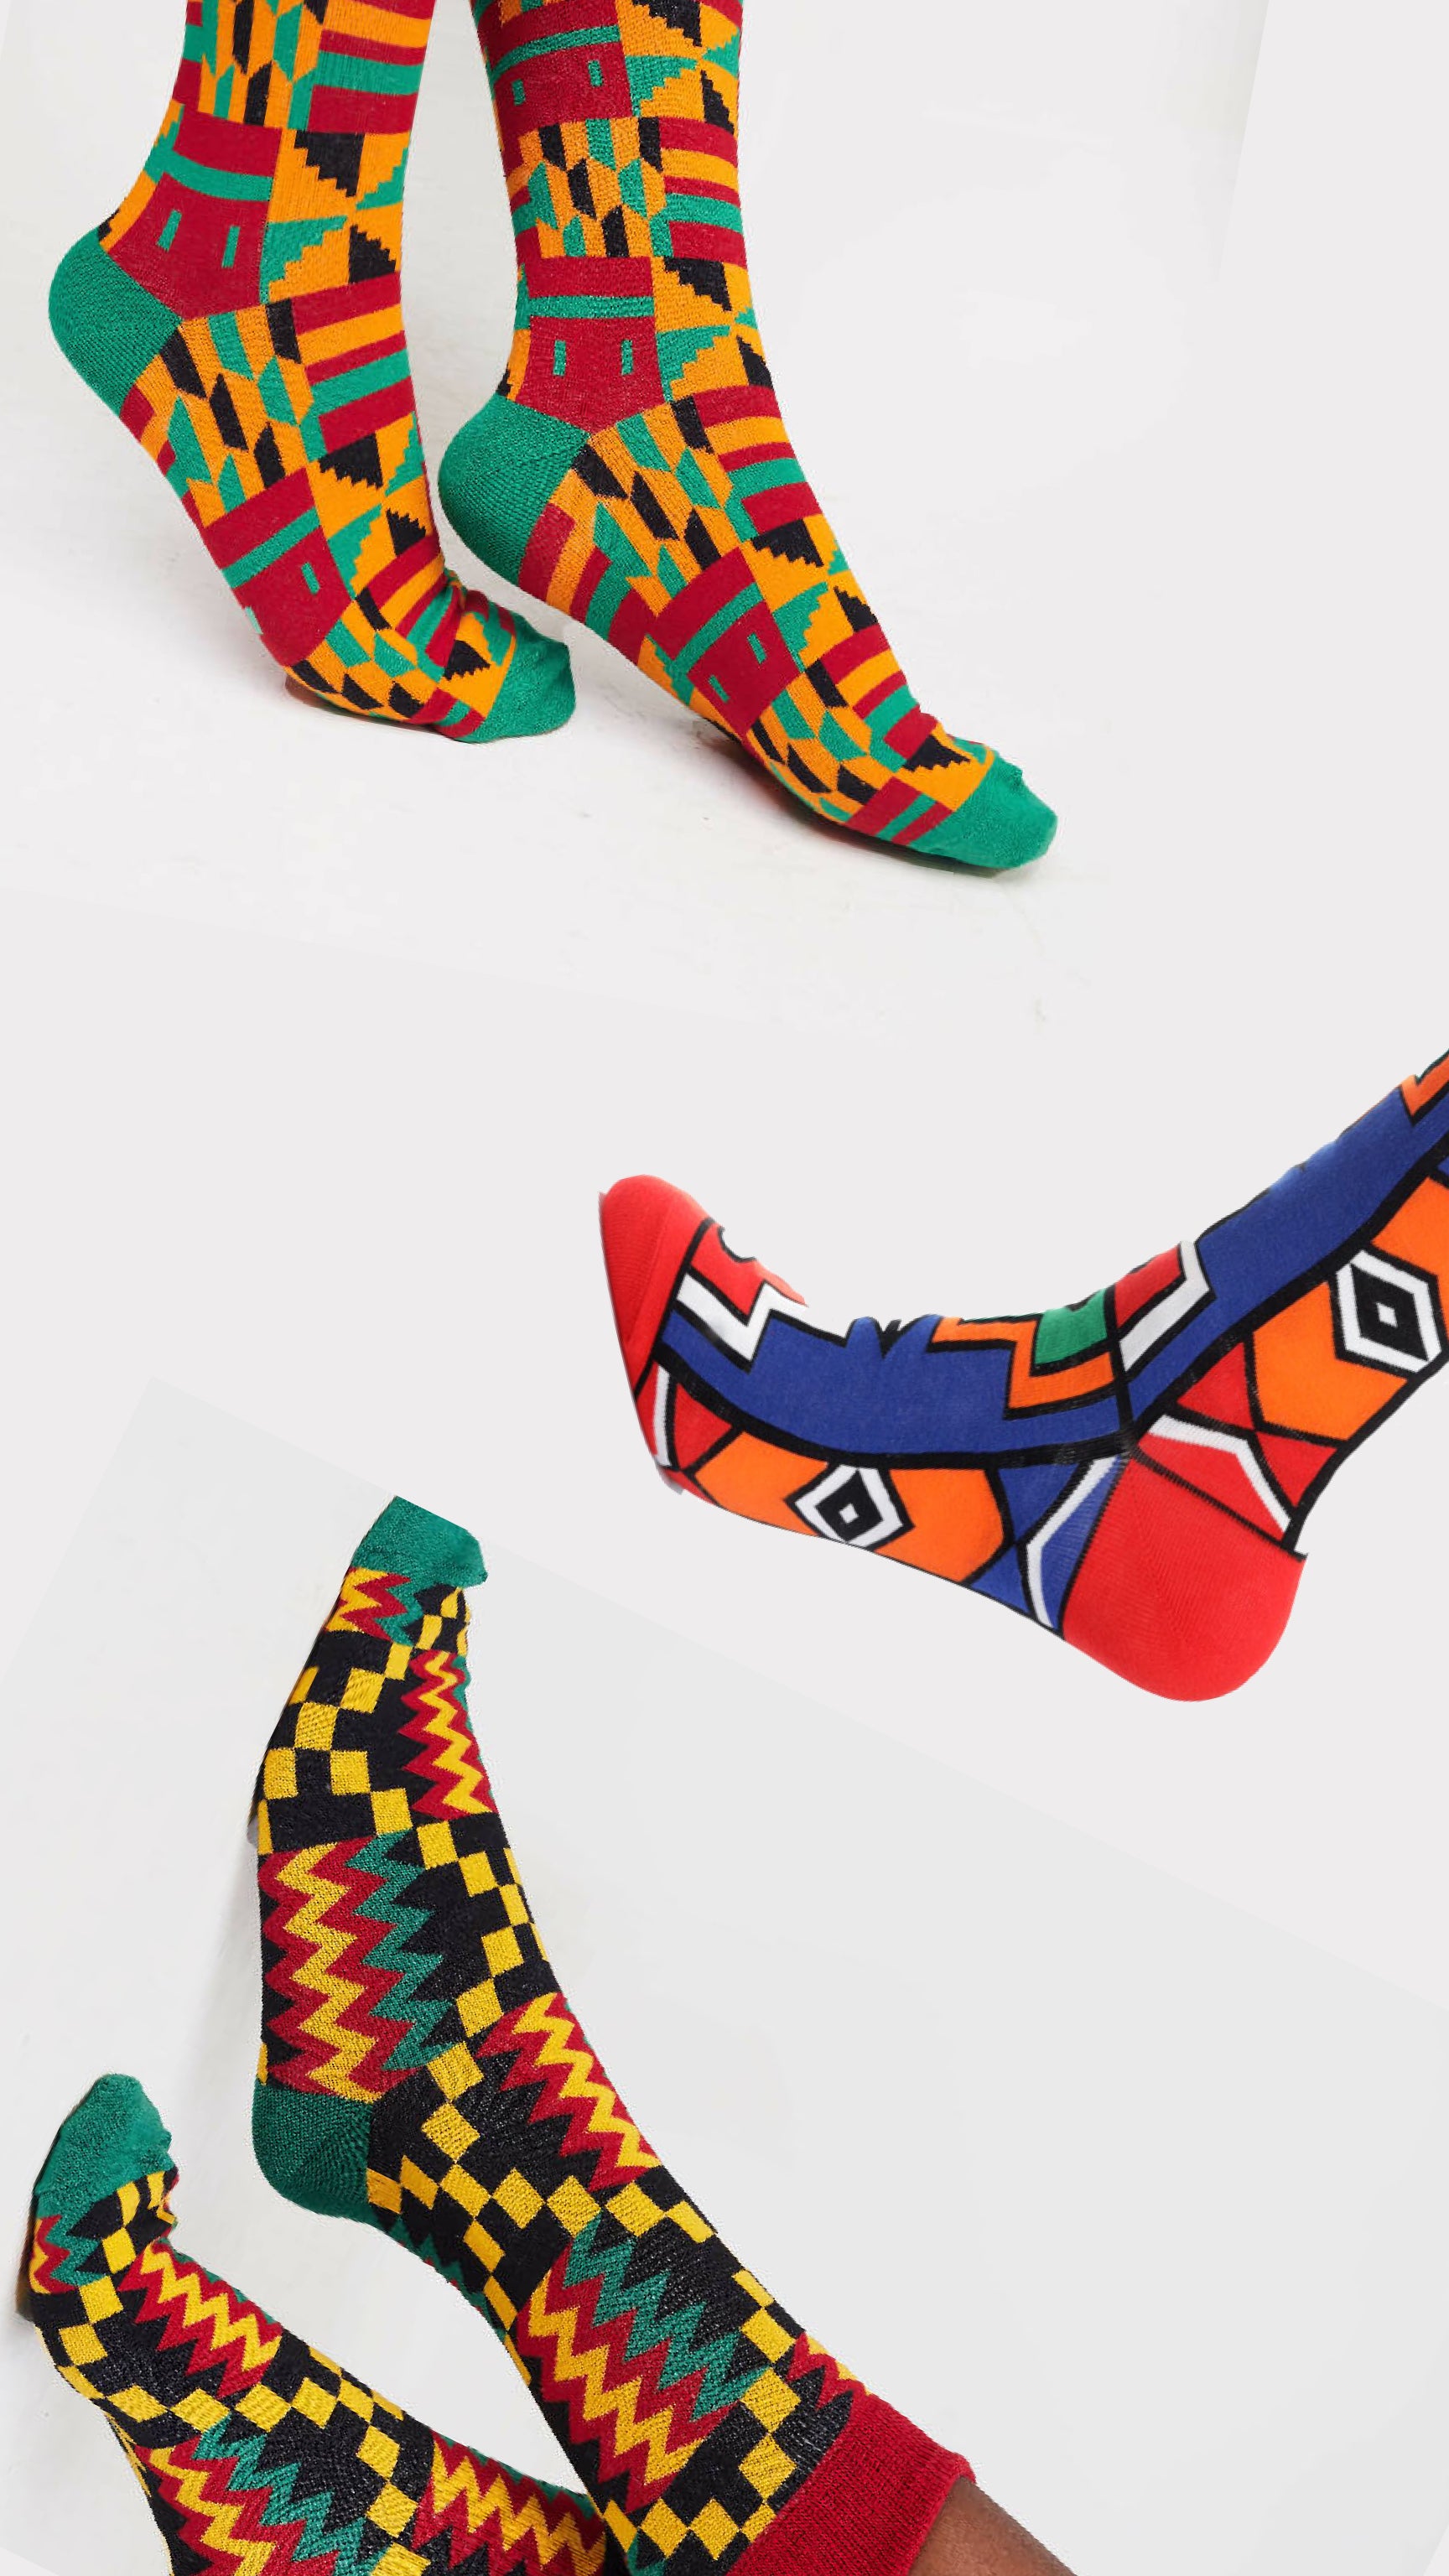 Socken aus Kenia - mikono.africa fair sozial nachhaltig designed in Kenia